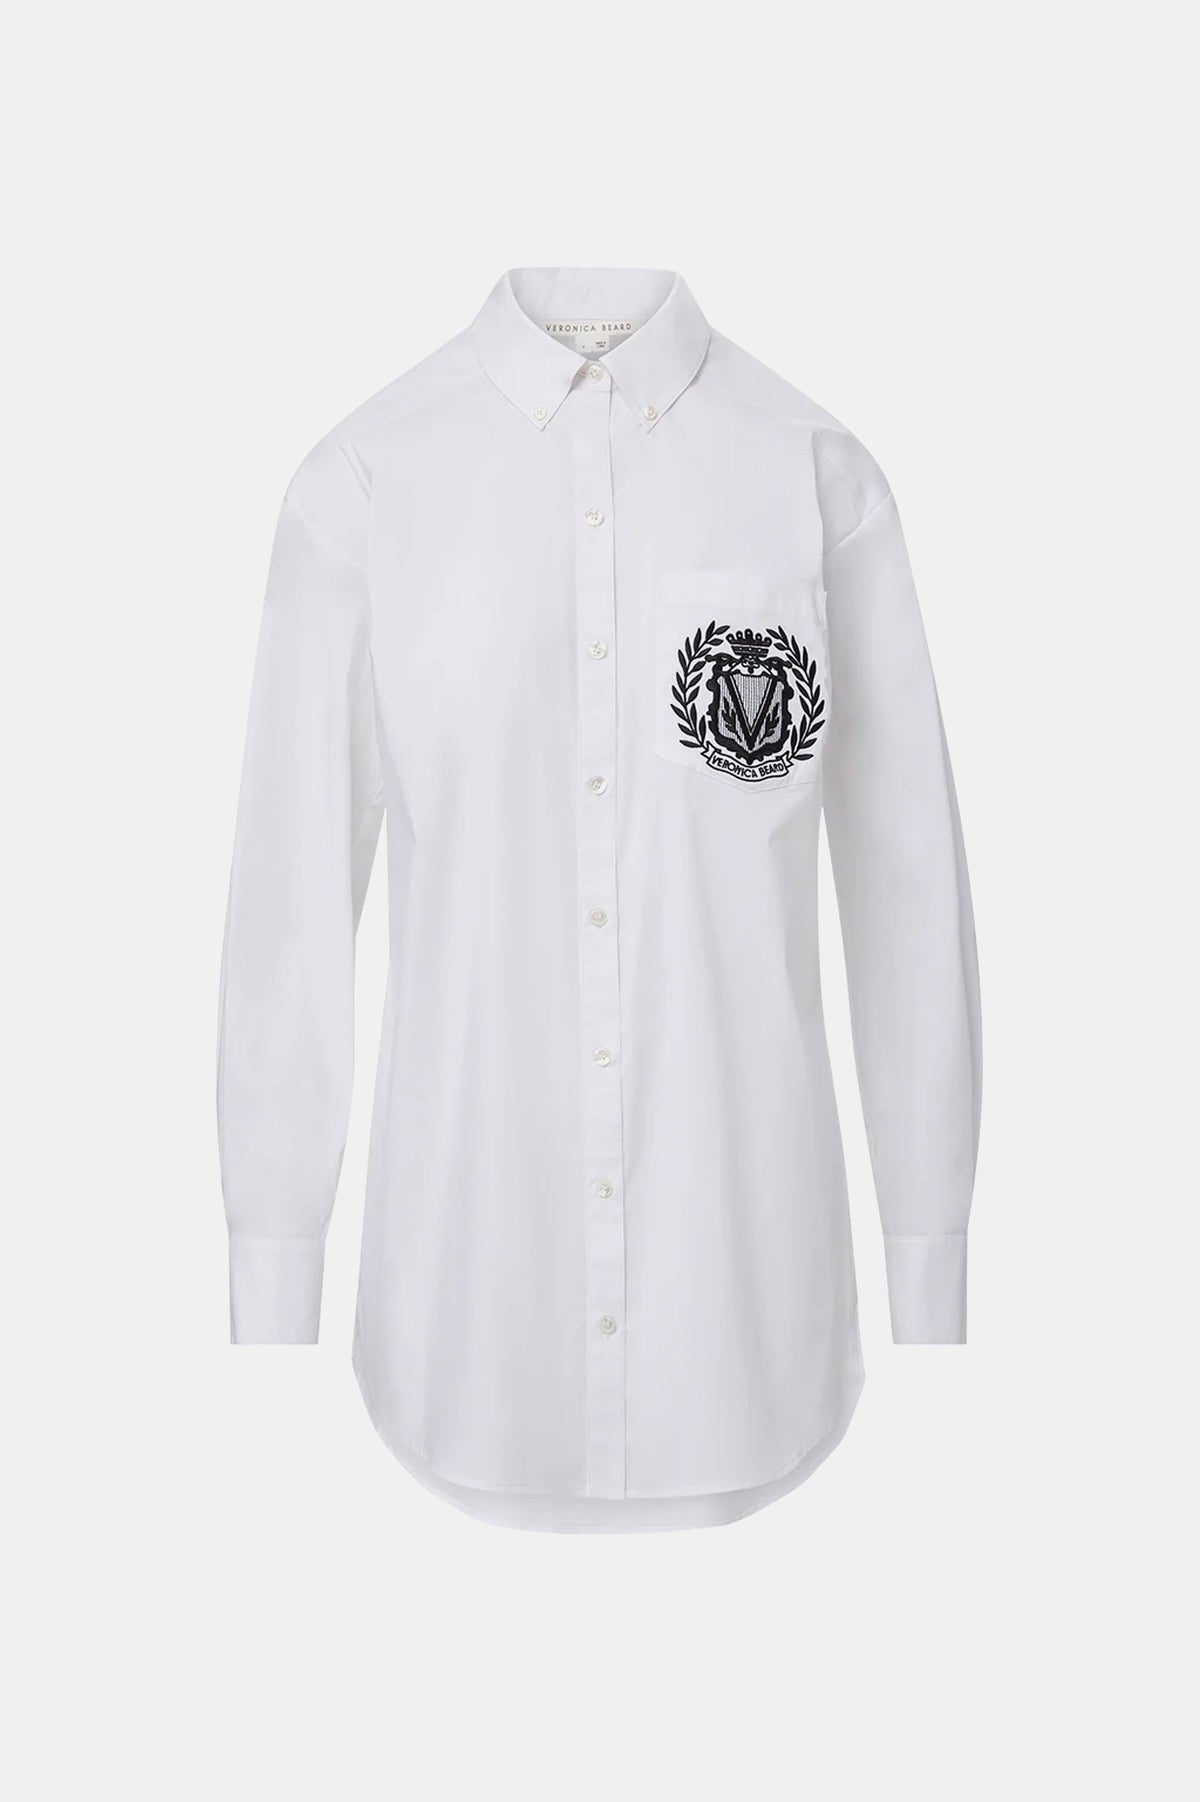 Lloyd Button Down Shirt in White